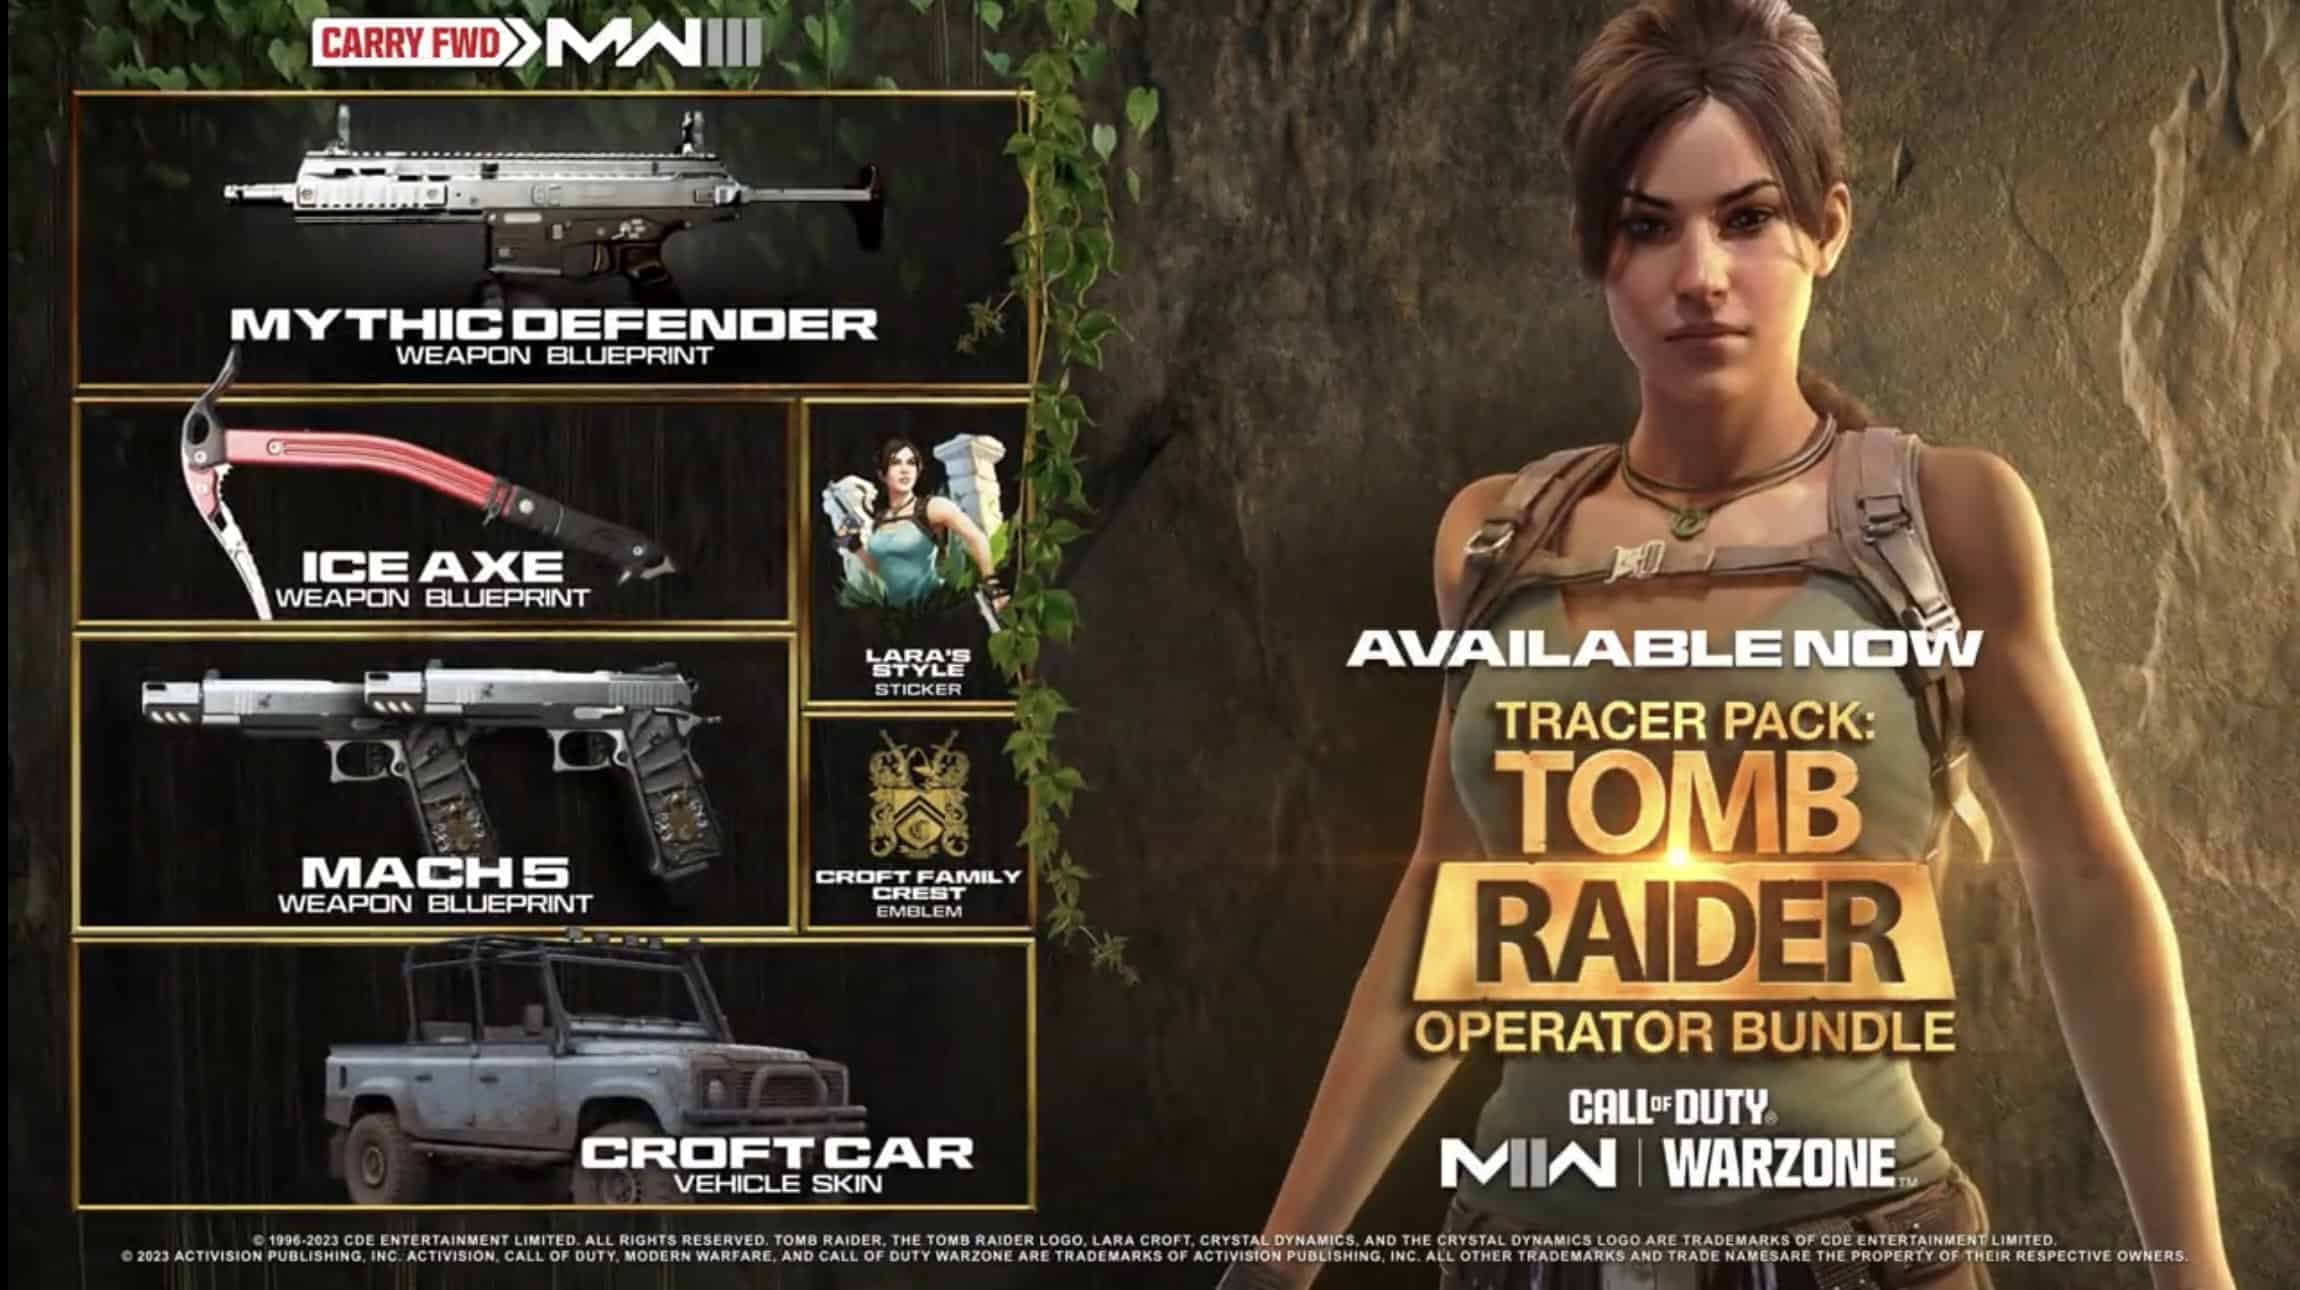 Tomb raider deluxe bundle featuring MW2 Lara Croft skin.